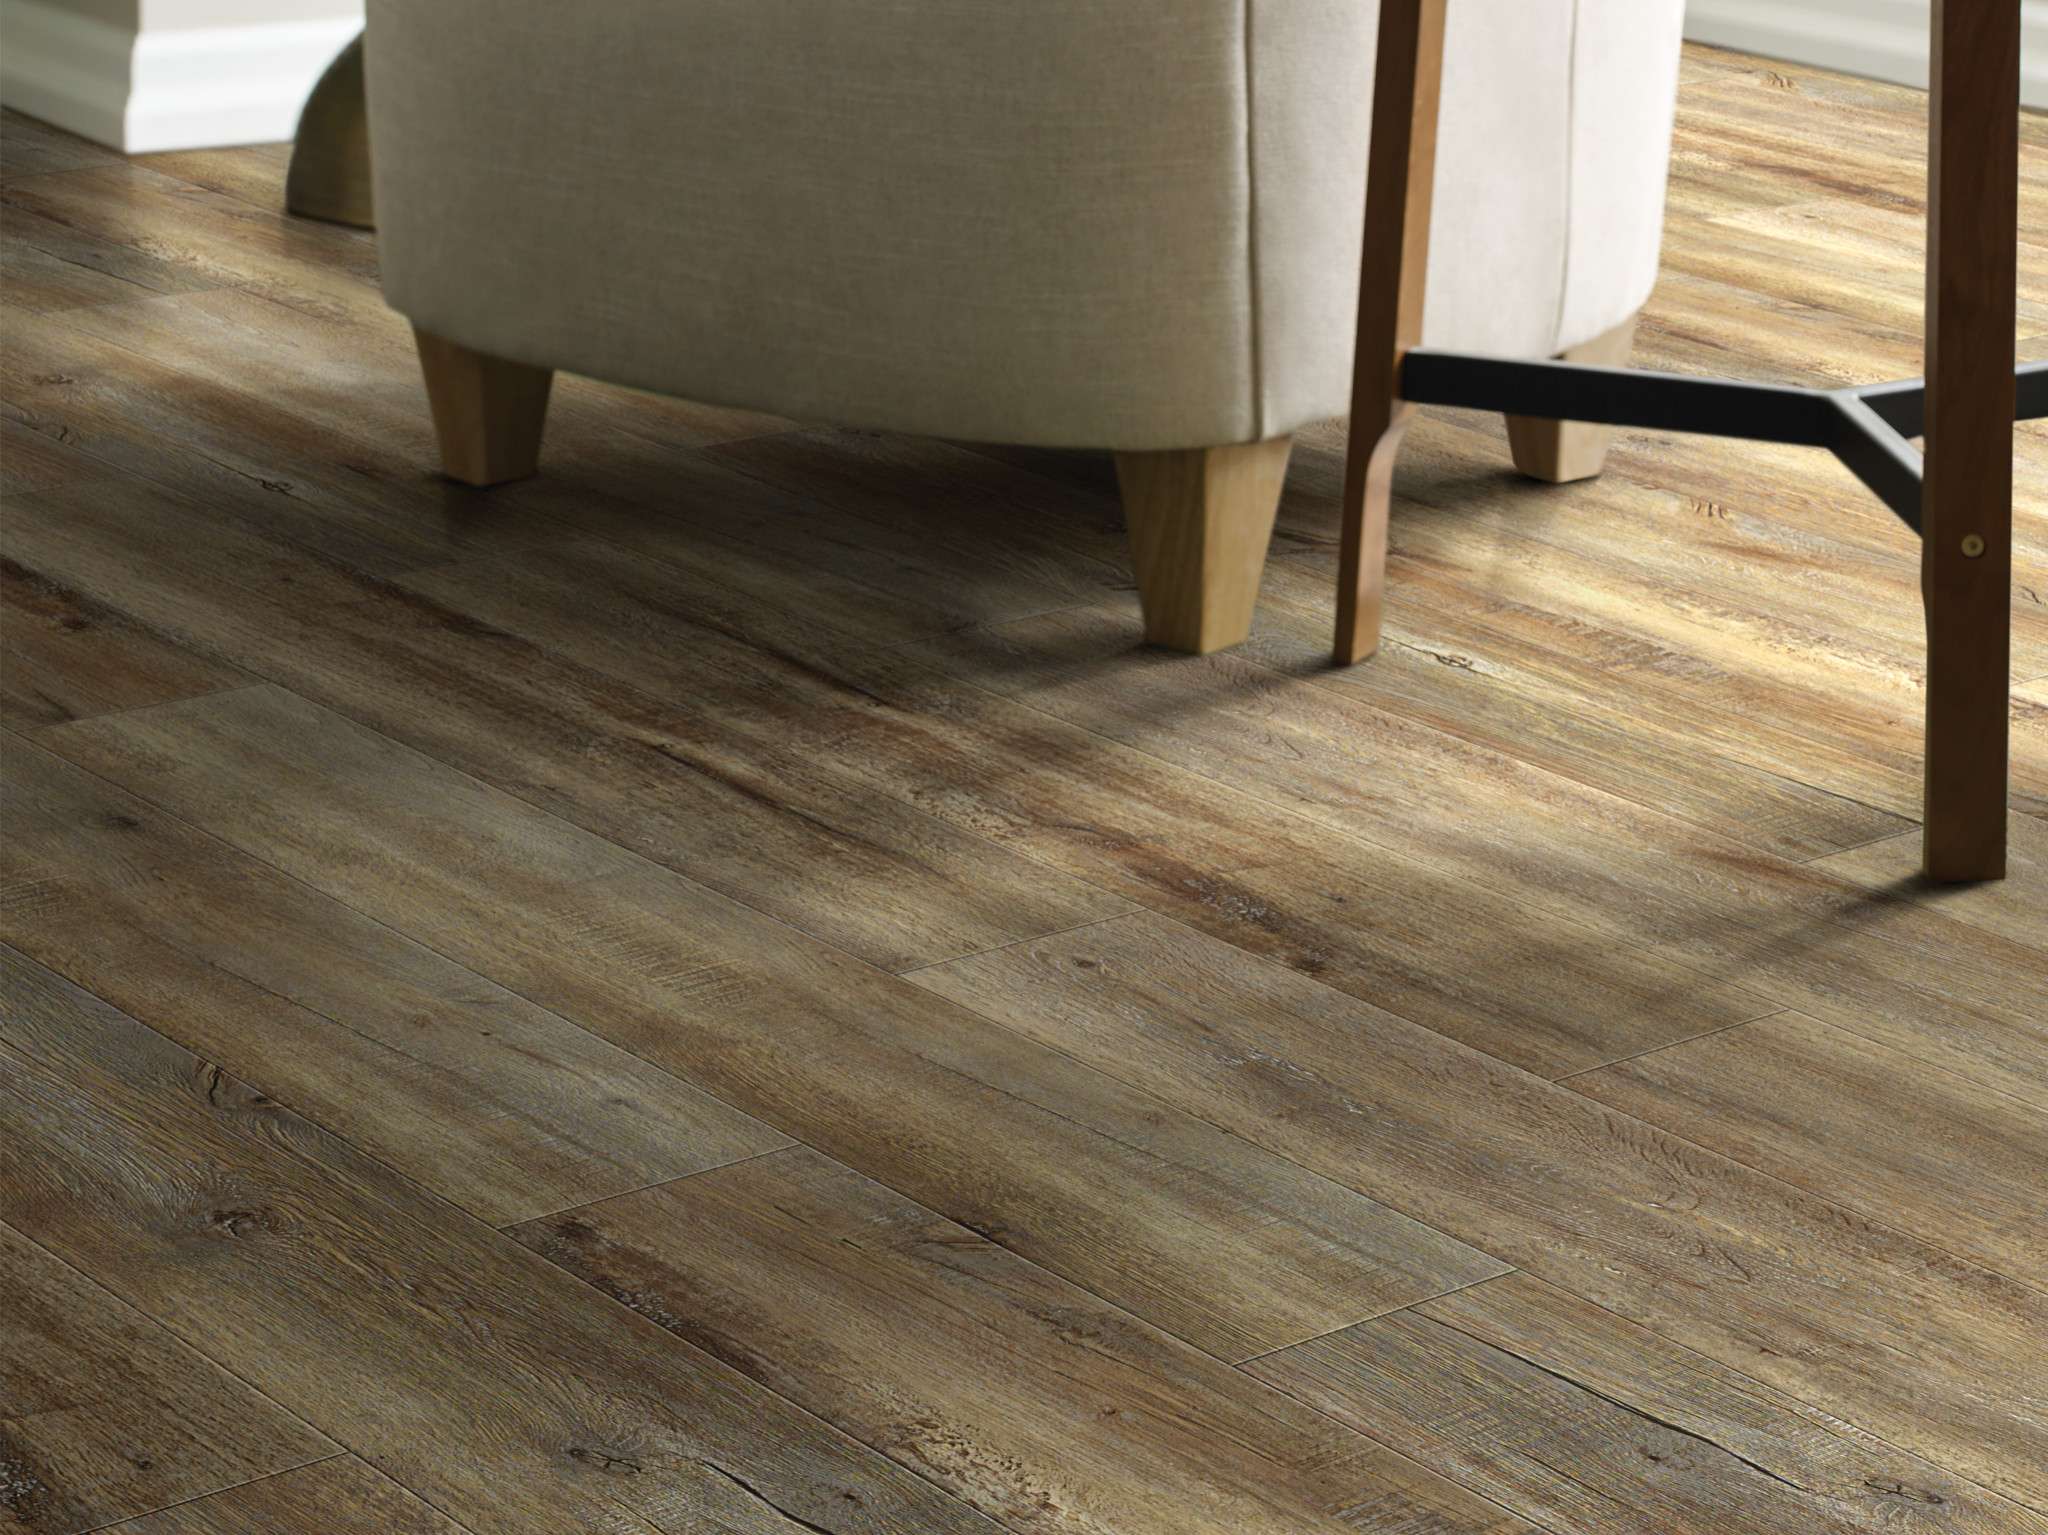 Impact 0925v Modeled Oak Vinyl, Shaw Carpet Hardwood Laminate Flooring